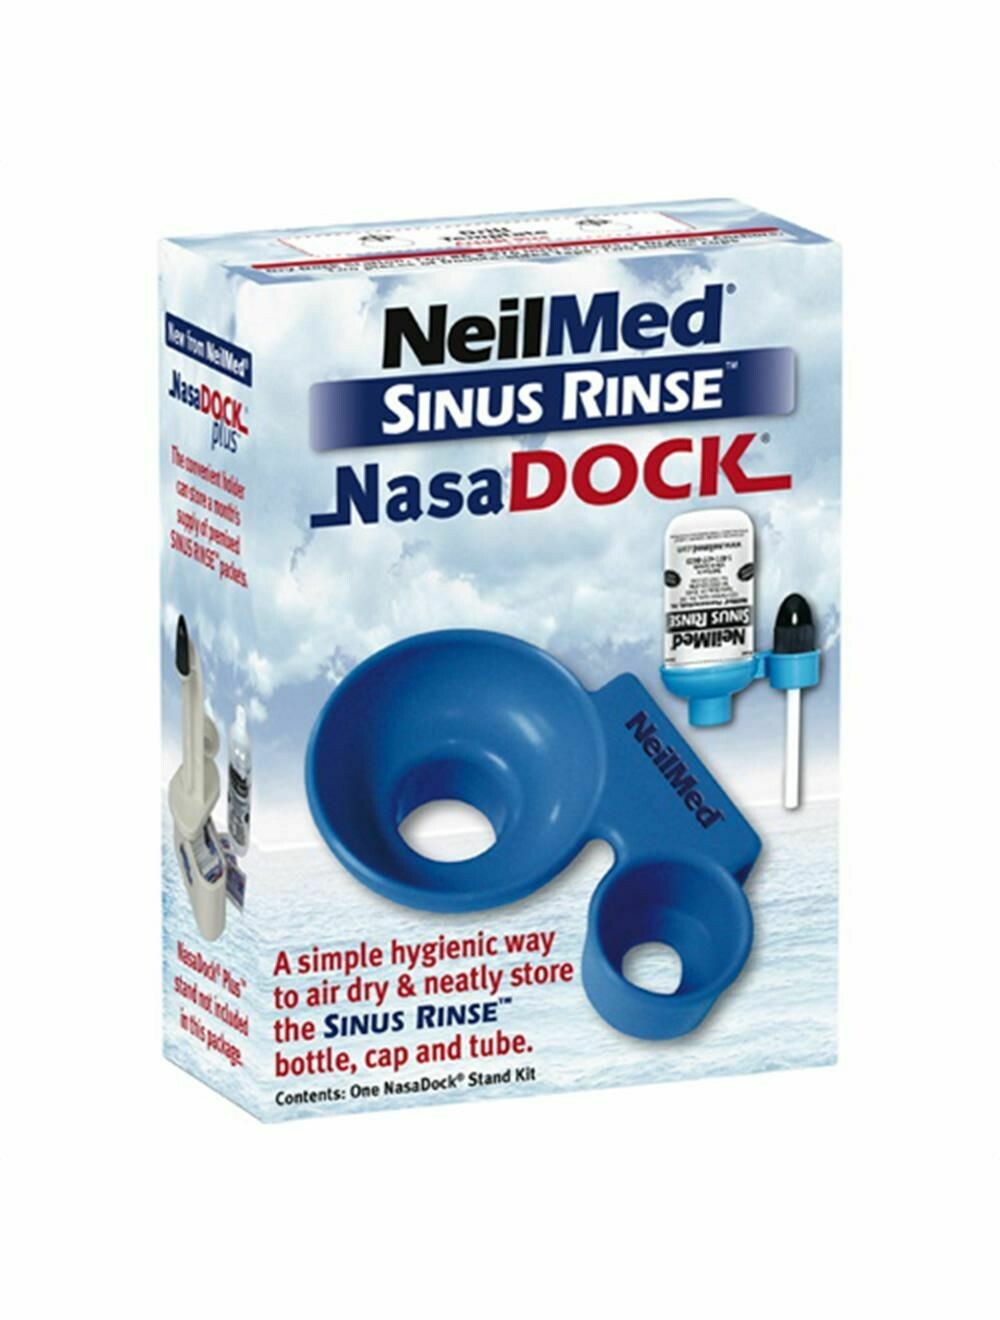 NeilMed Sinus Rinse Dry Dock Stand ኒልሜድ ሳይን ሪንስ ድራይ ዶክ ስታንድ